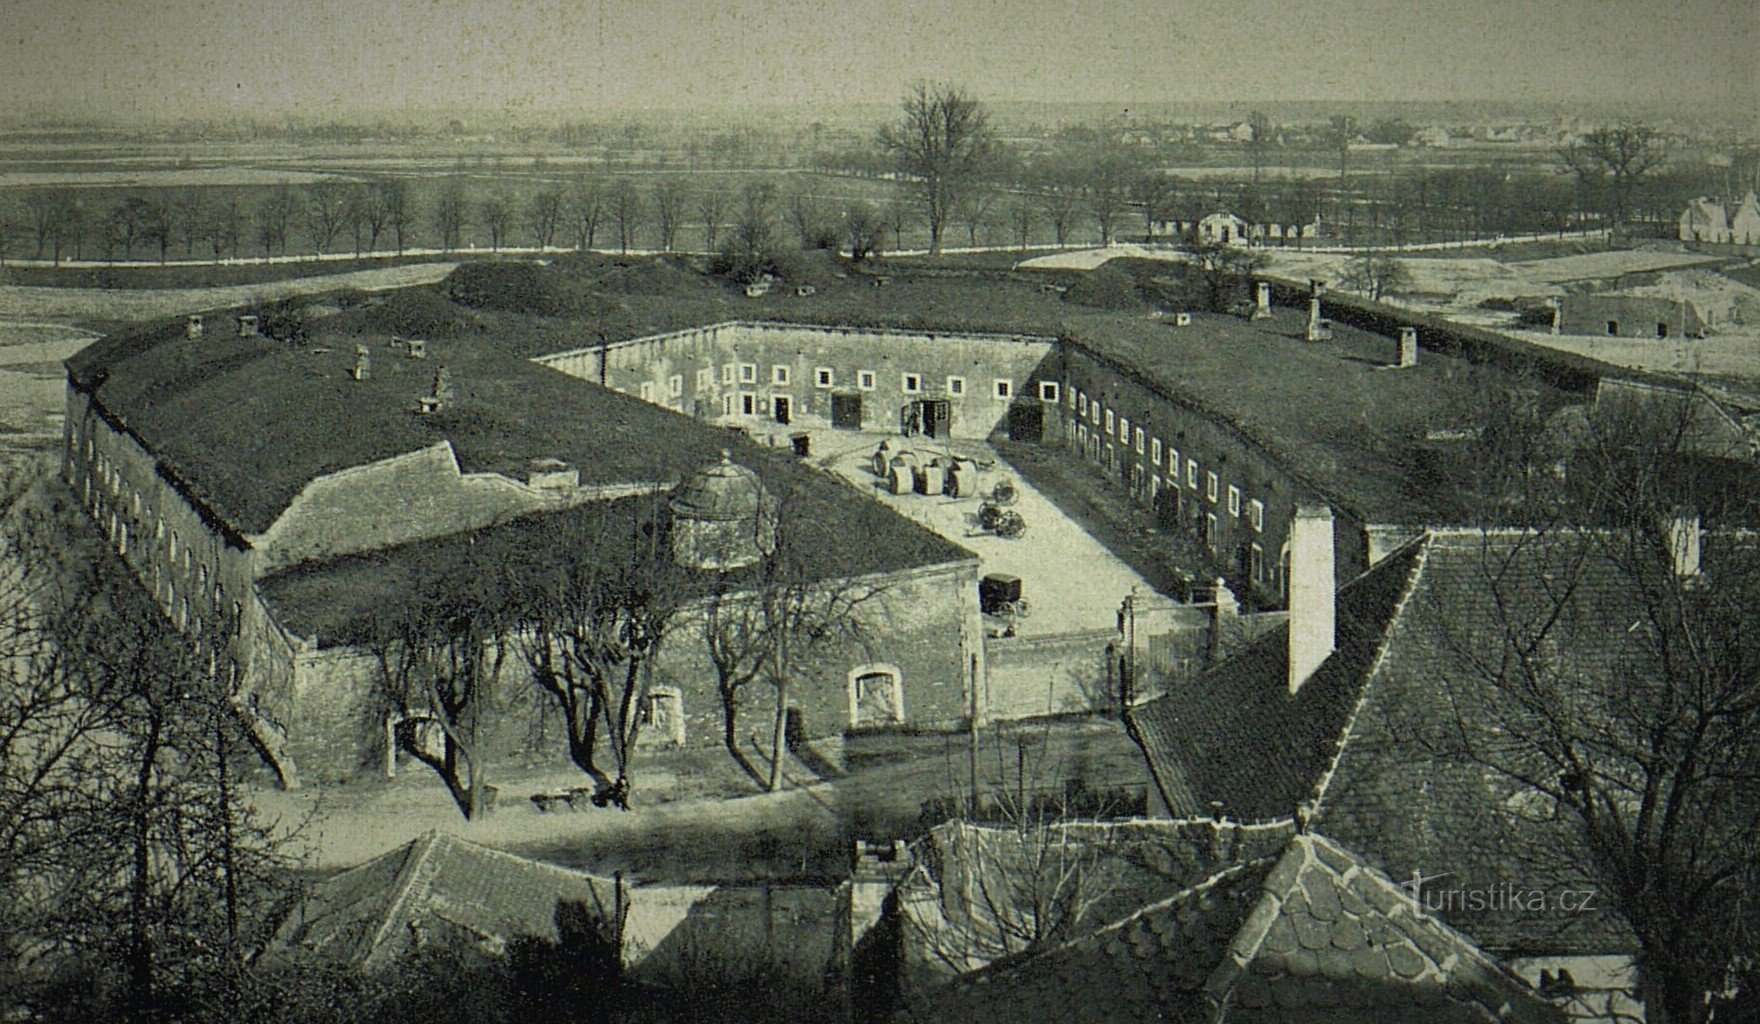 Pháo đài kỵ binh số 35 trước khi bị phá hủy (Hradec Králové)